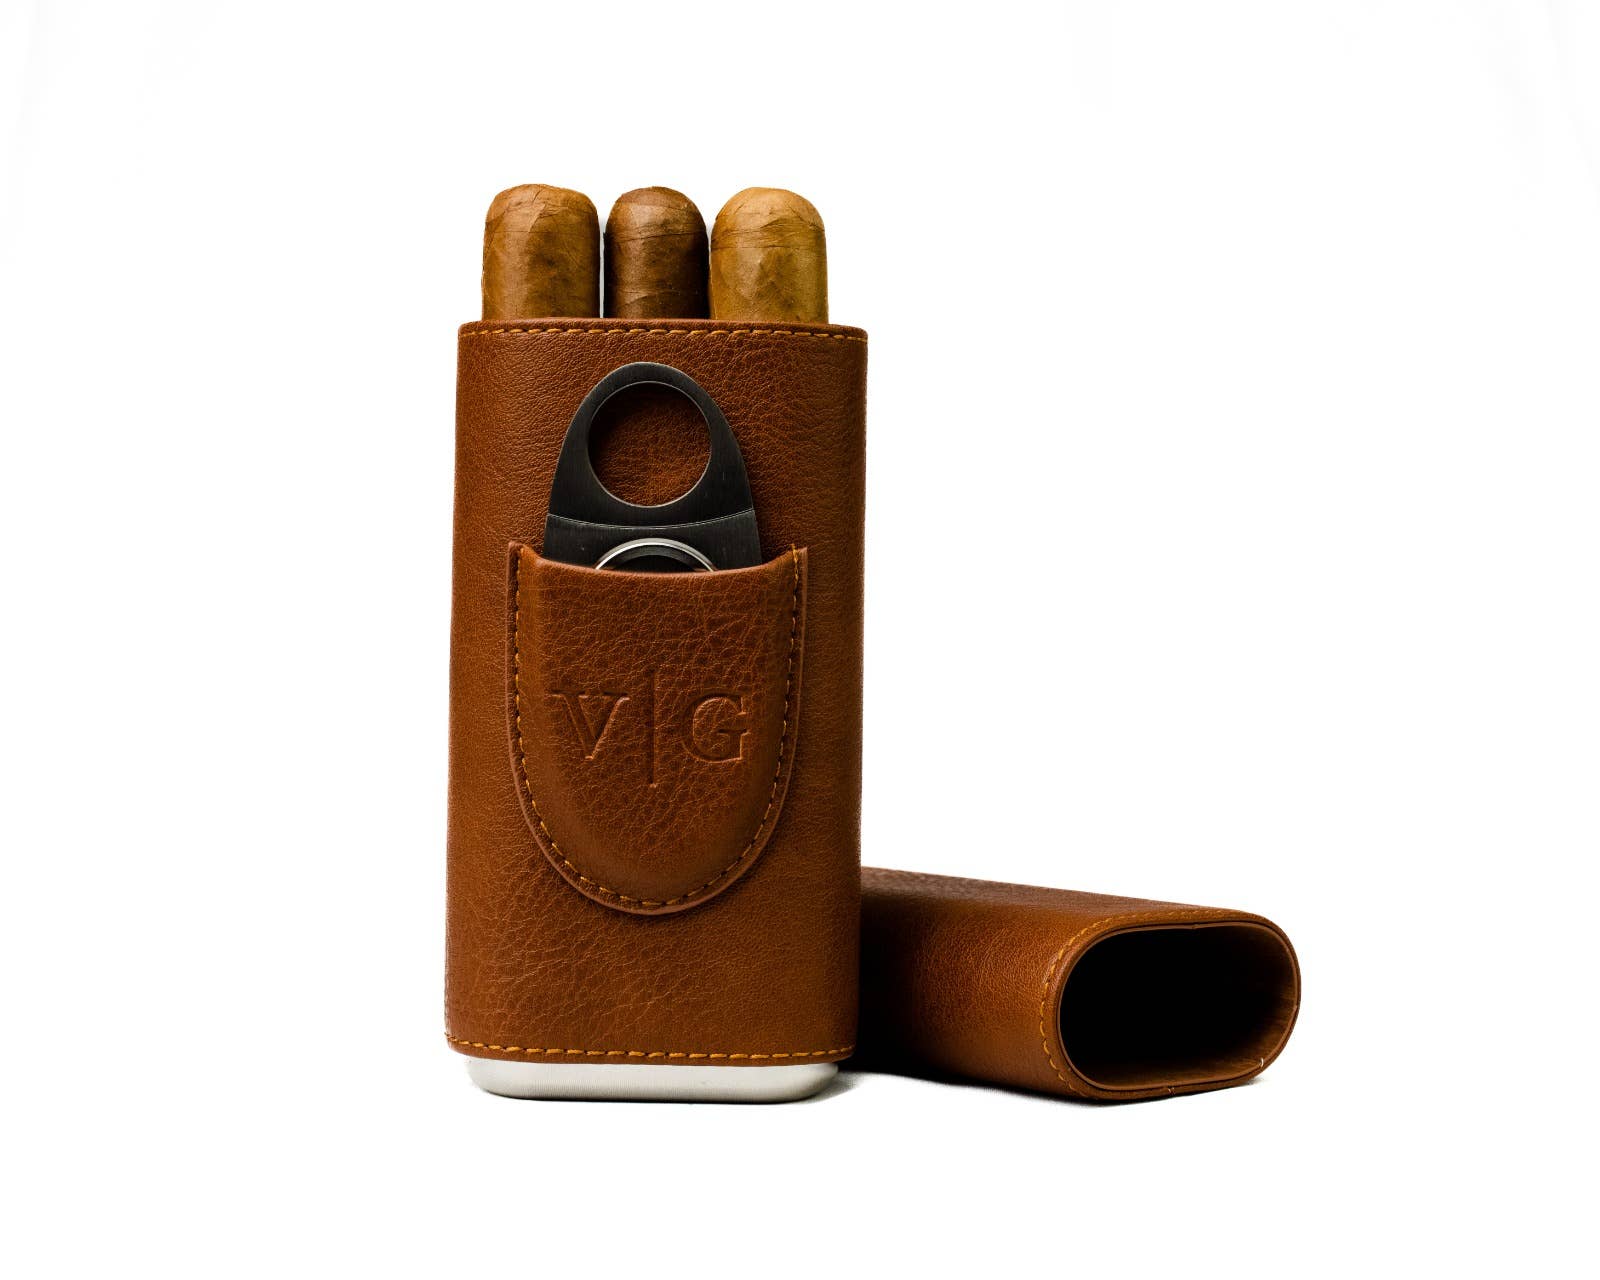 Luxury Cigar Cases - The Cigar Holder